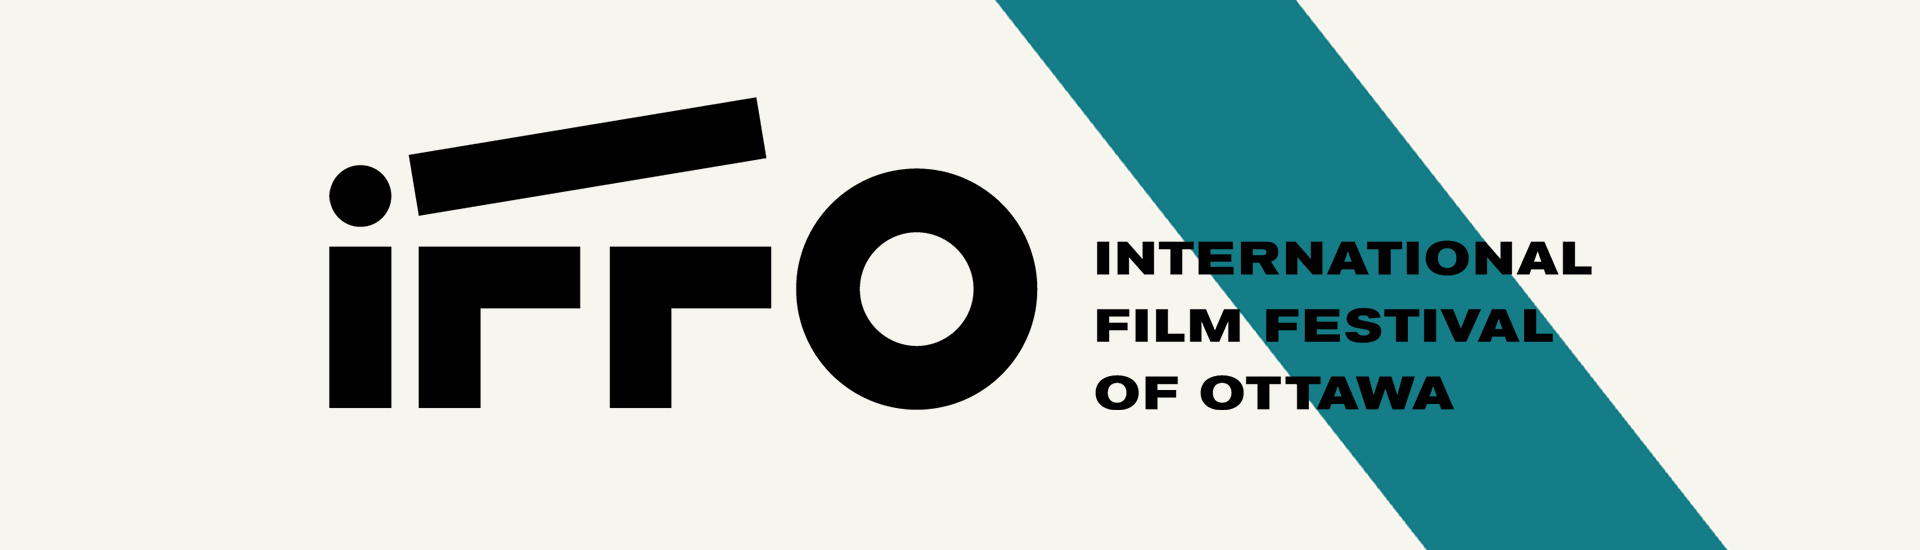 International Film Festival of Ottawa